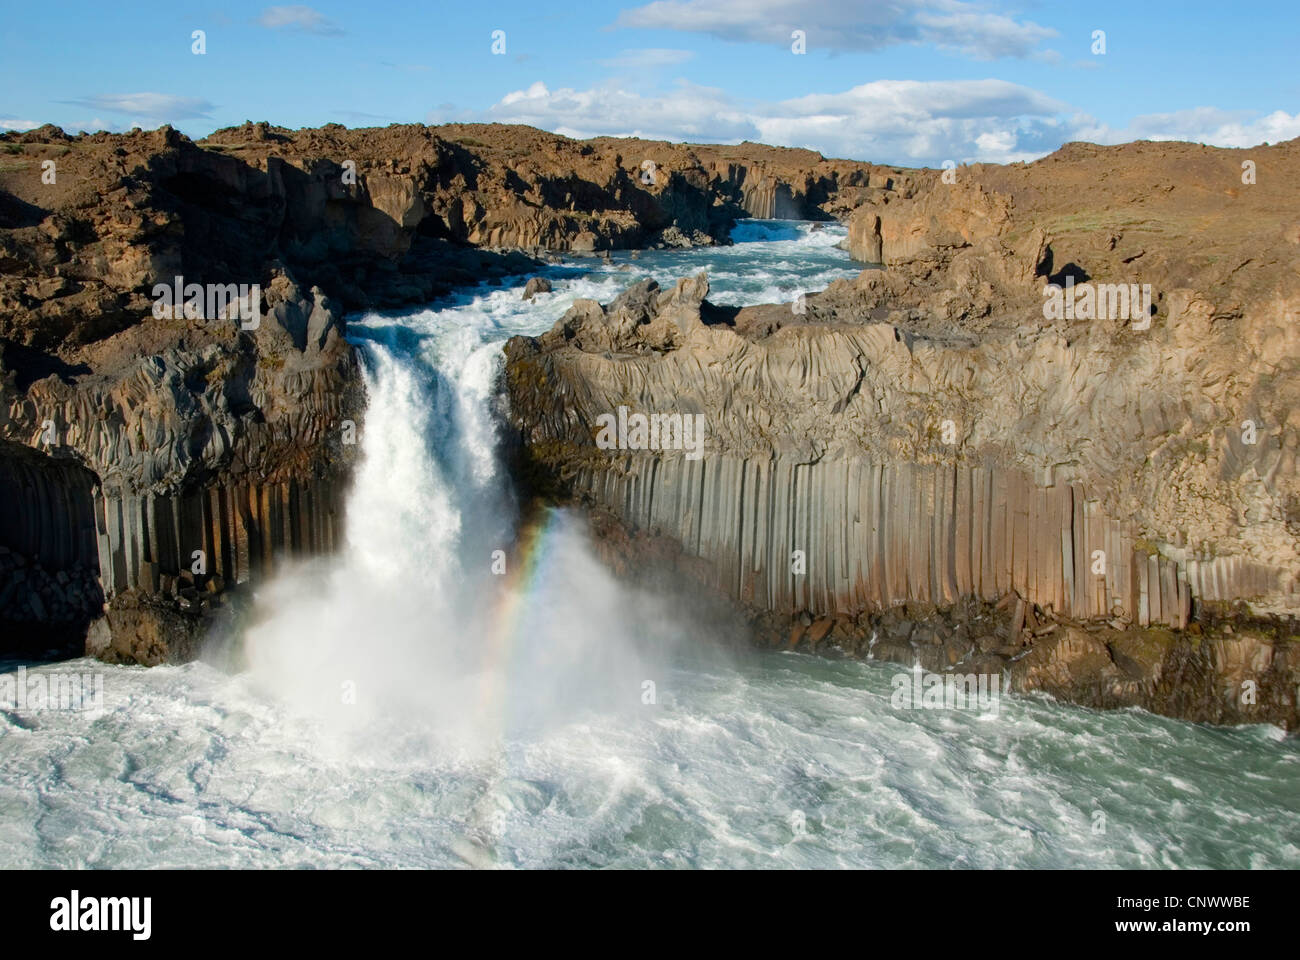 La cascata "Aldeyjarfoss' del fiume Skjlfandafljt, Islanda, Sprengisandsleid, Sprengisandur Hochlandstrasse F26 Foto Stock